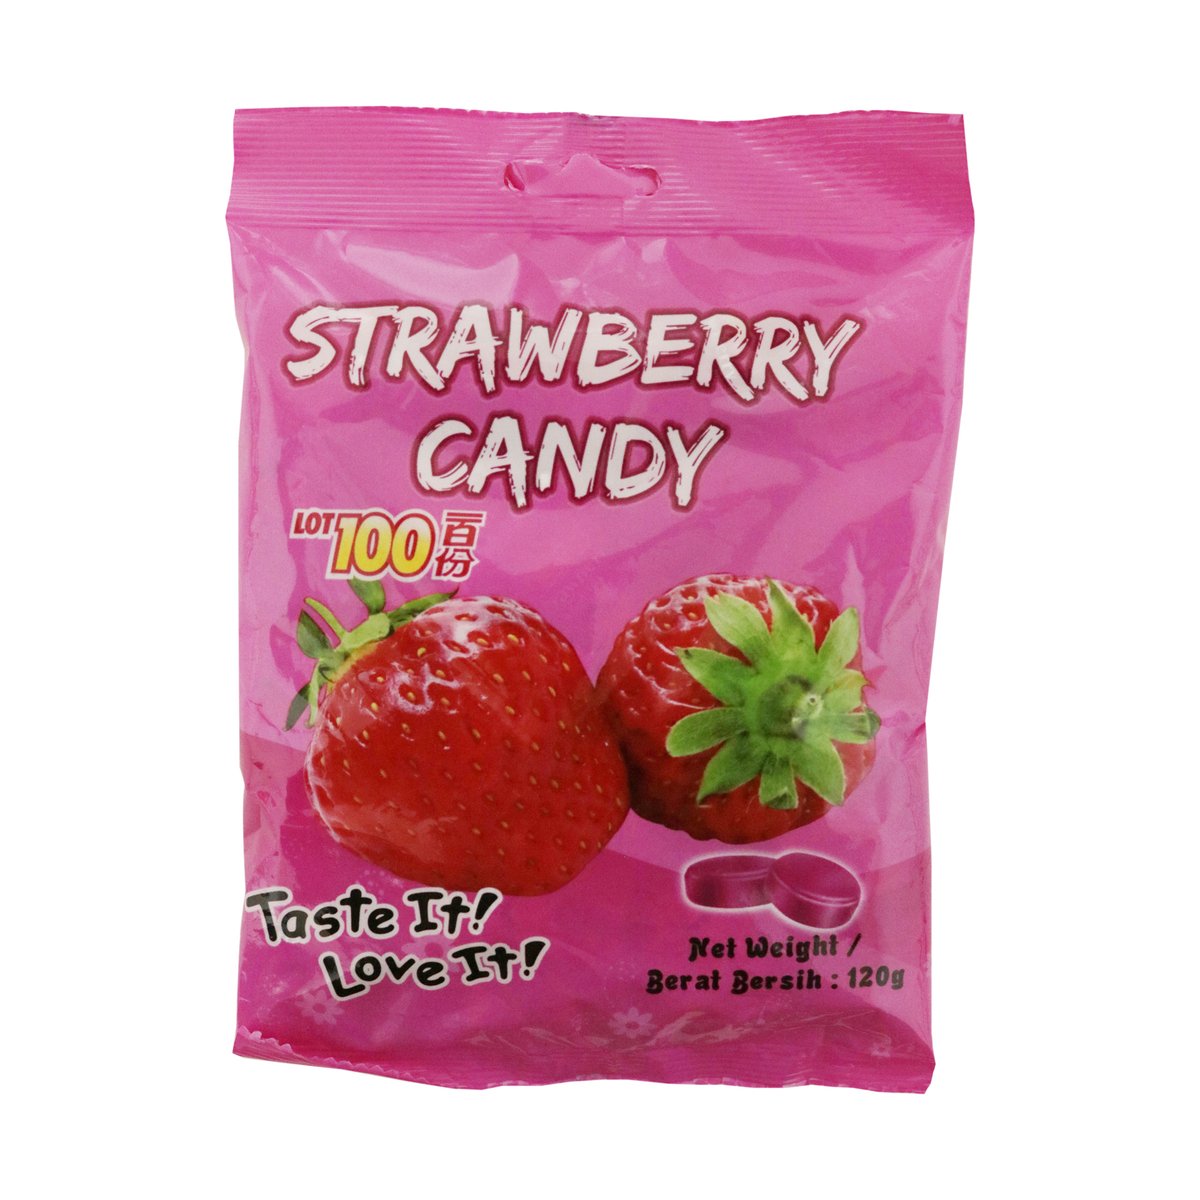 Lot 100 Candy Strawberry 120g